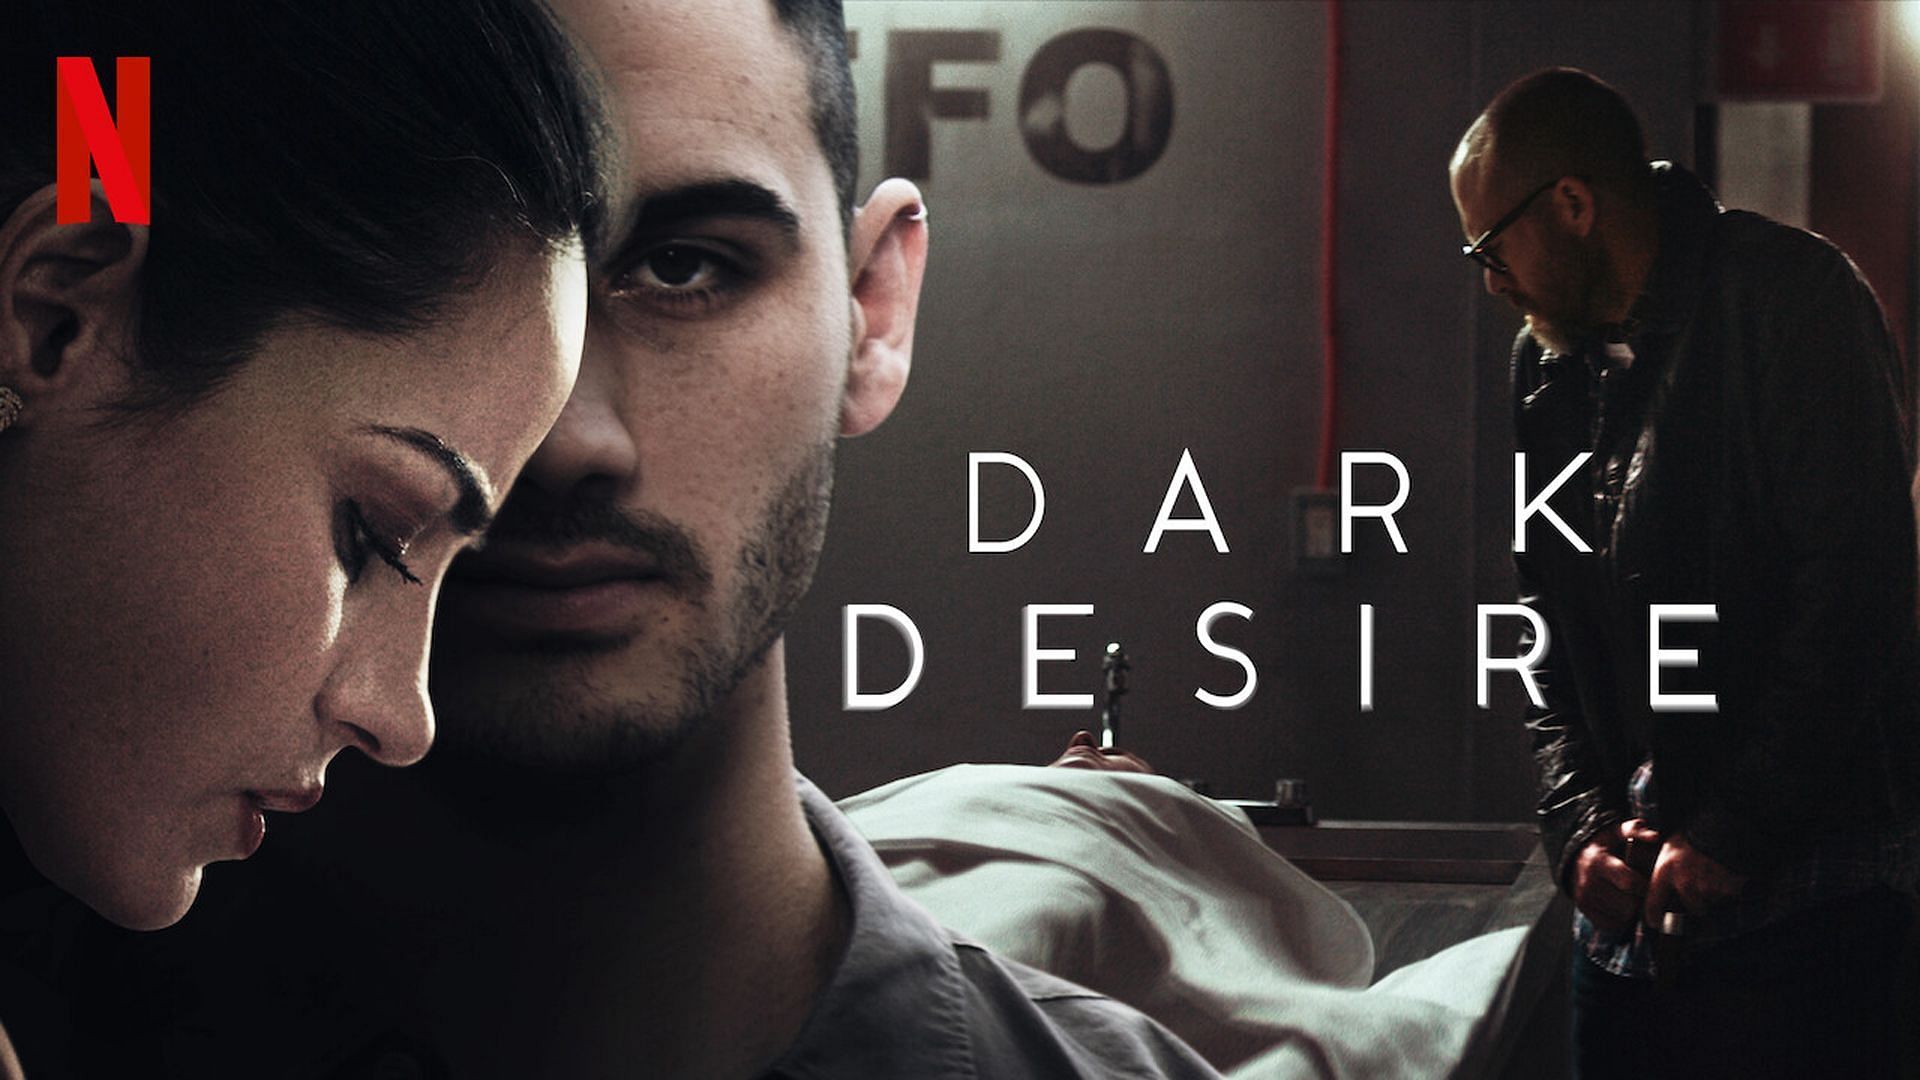 Dark Desire (Image via wallpapercave.com)